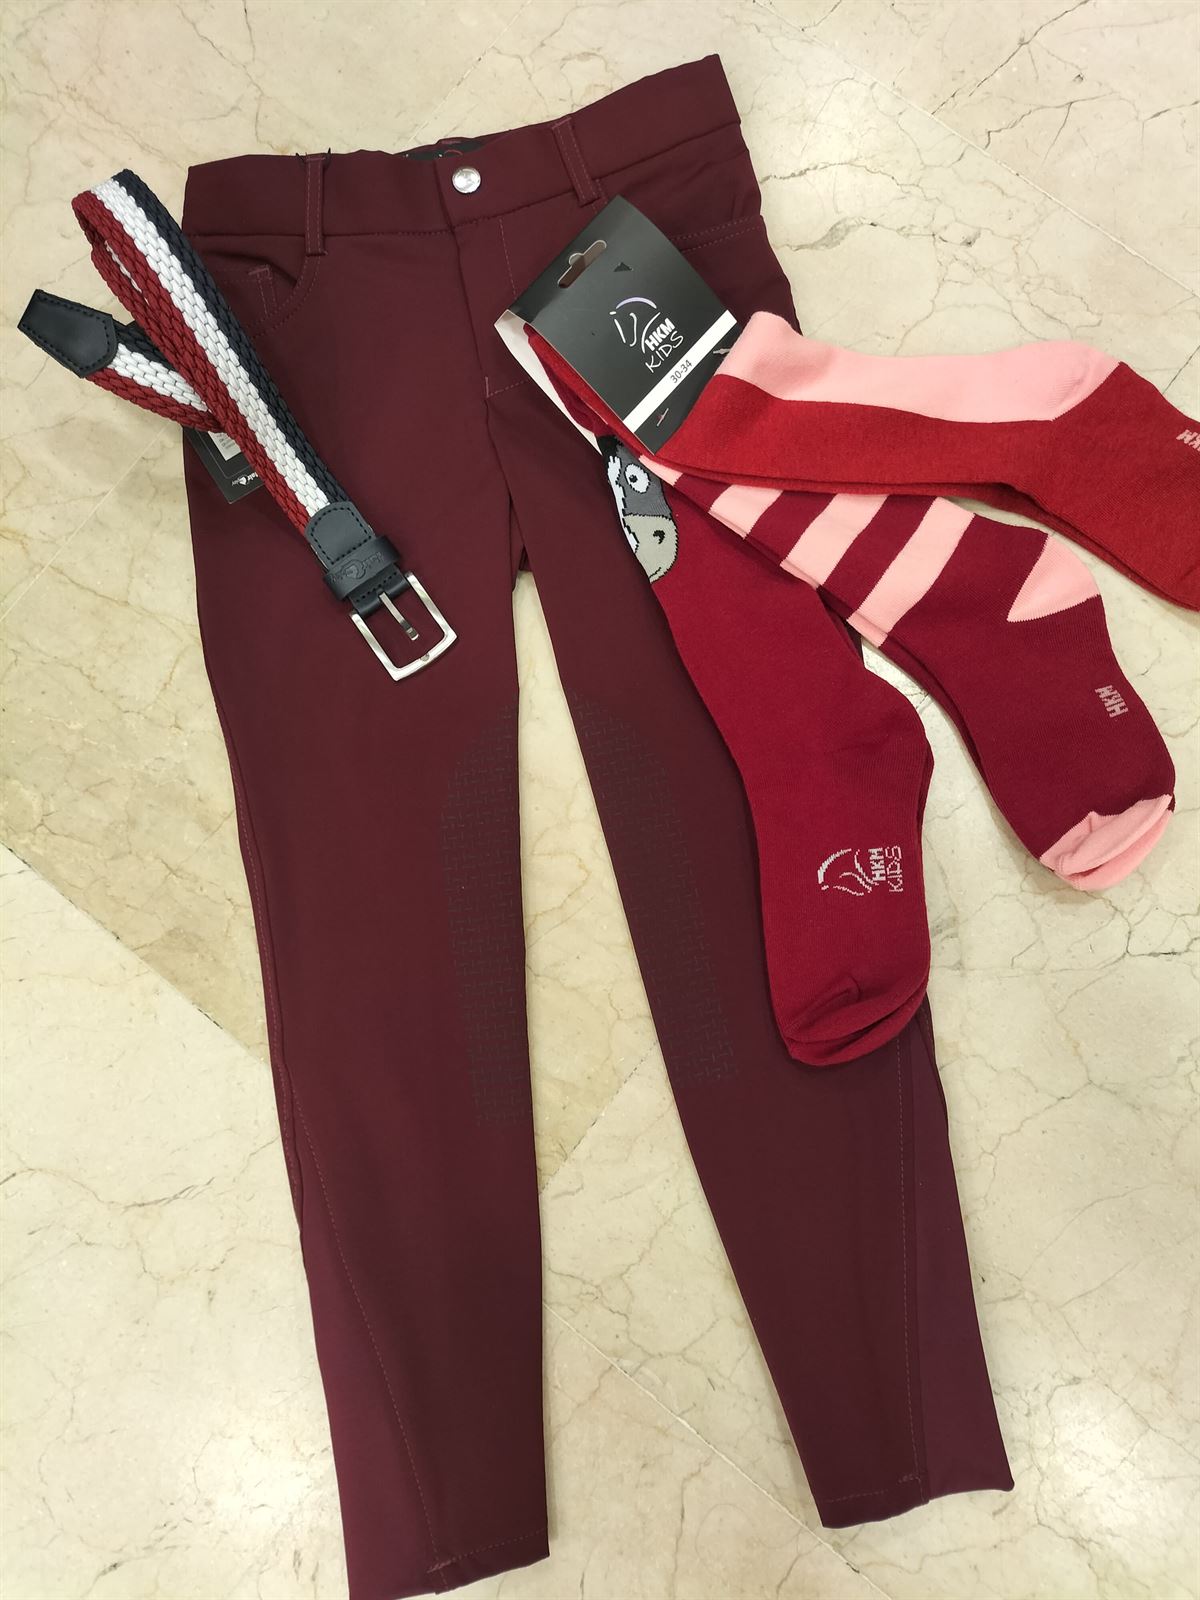 Pantalón unisex HKM Sports Equipment Sunshine color burdeos, rodilla silicona, tallaje infantil - Imagen 2